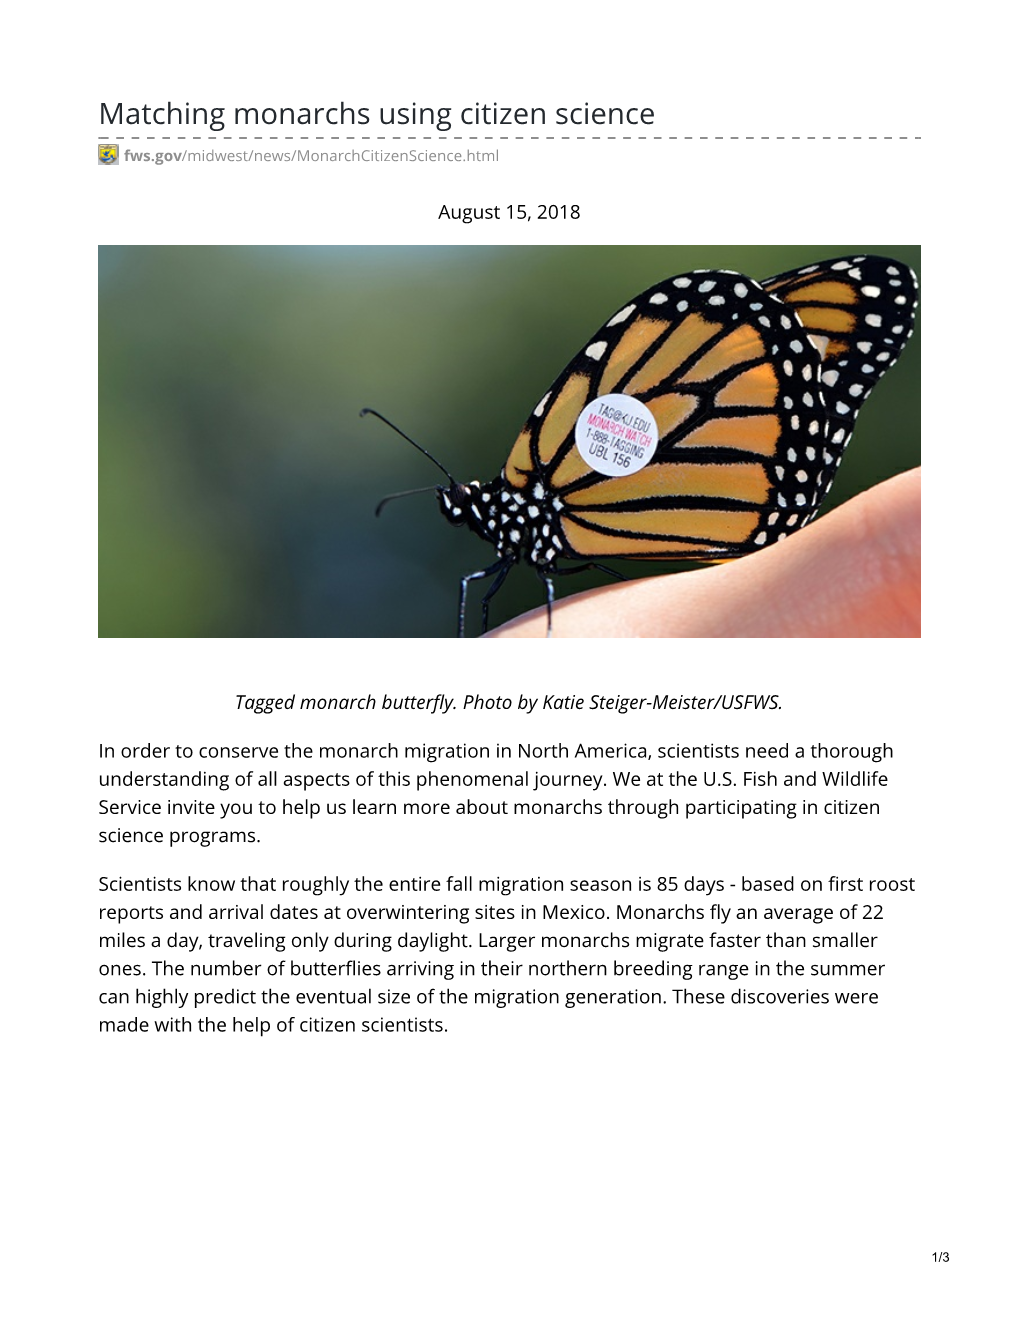 Matching Monarchs Using Citizen Science